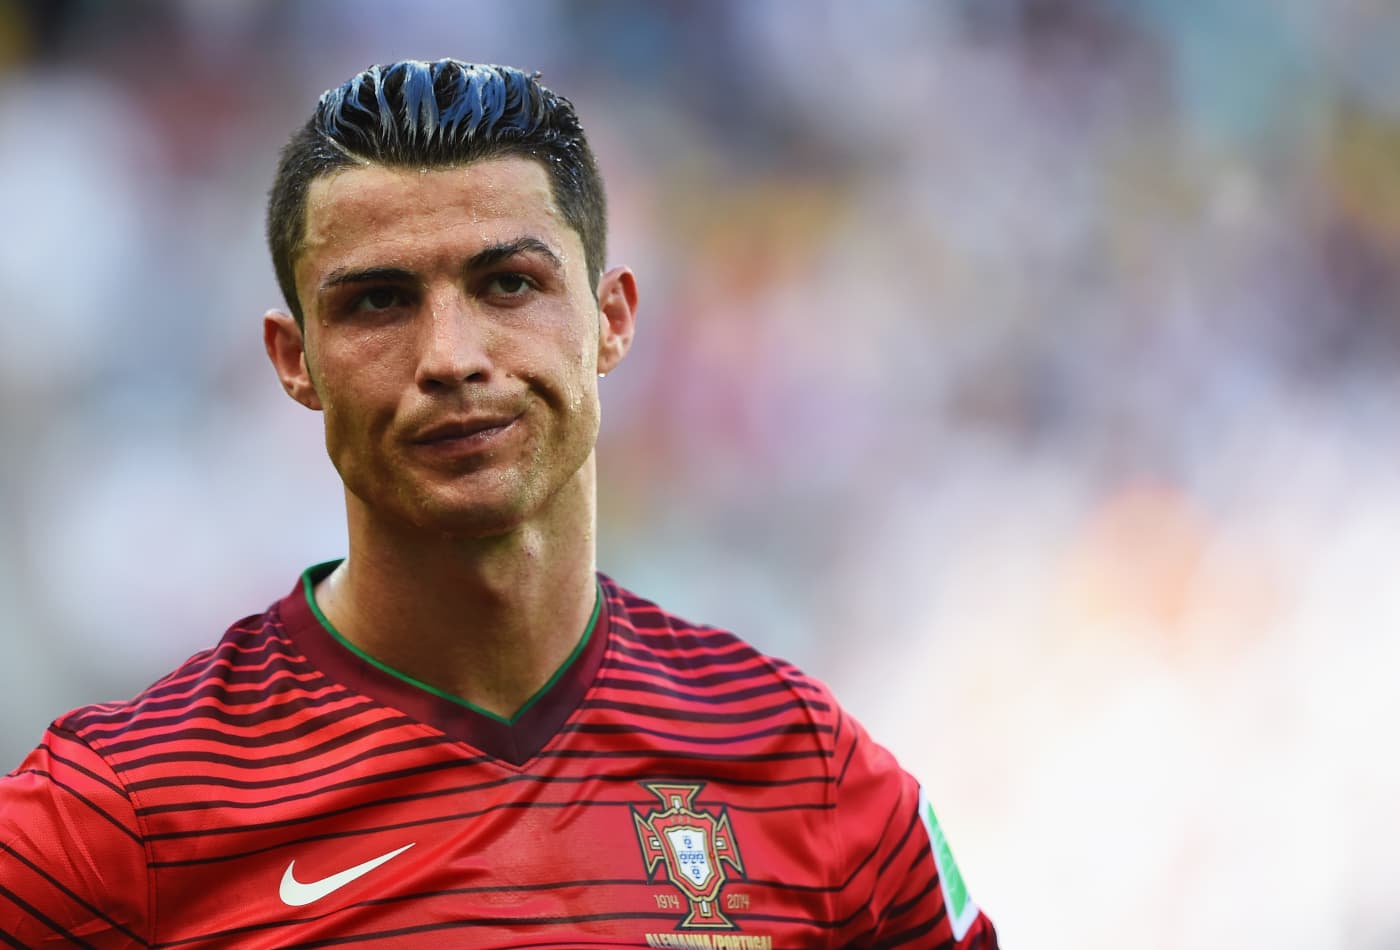 Soccer star Cristiano Ronaldo fined over $20 million for tax fraud